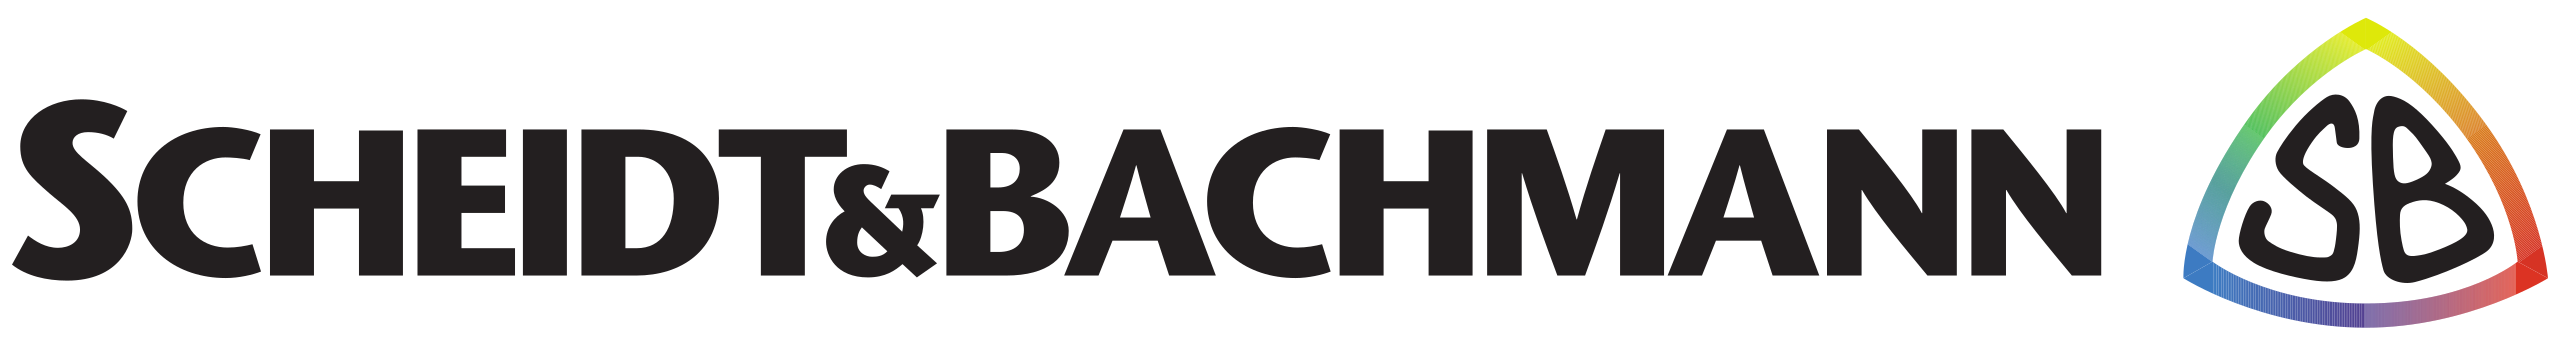 Scheidt & Bachmann Logo